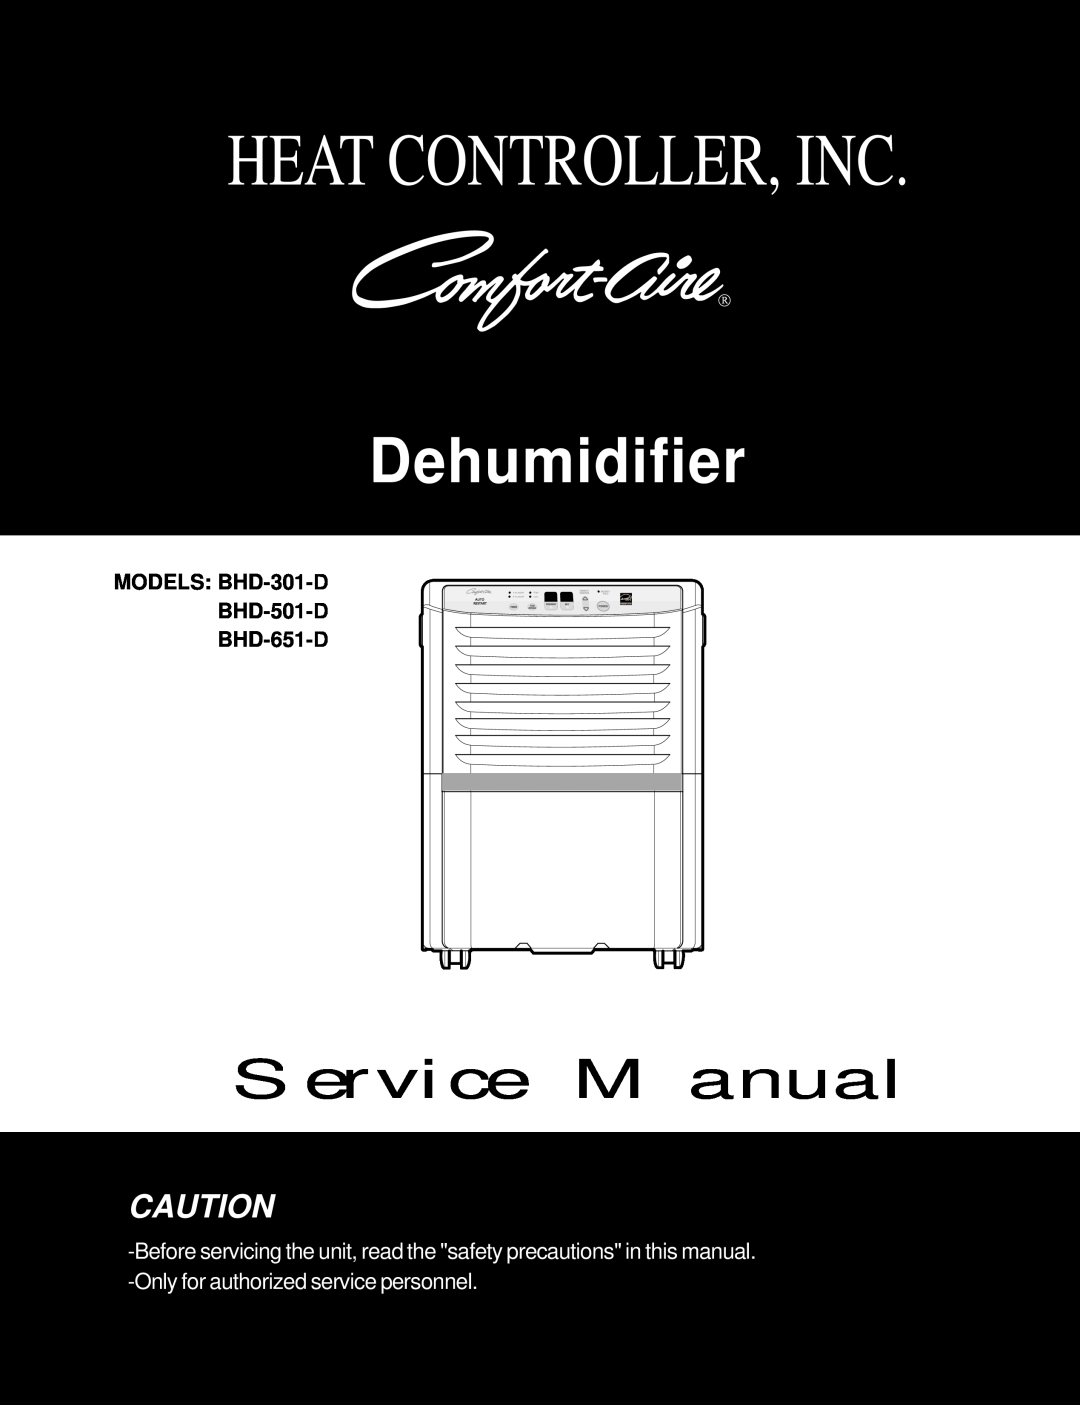 Heat Controller service manual Heat Controller, Inc, Dehumidifier, MODELS BHD-301-D BHD-501-D BHD-651-D 